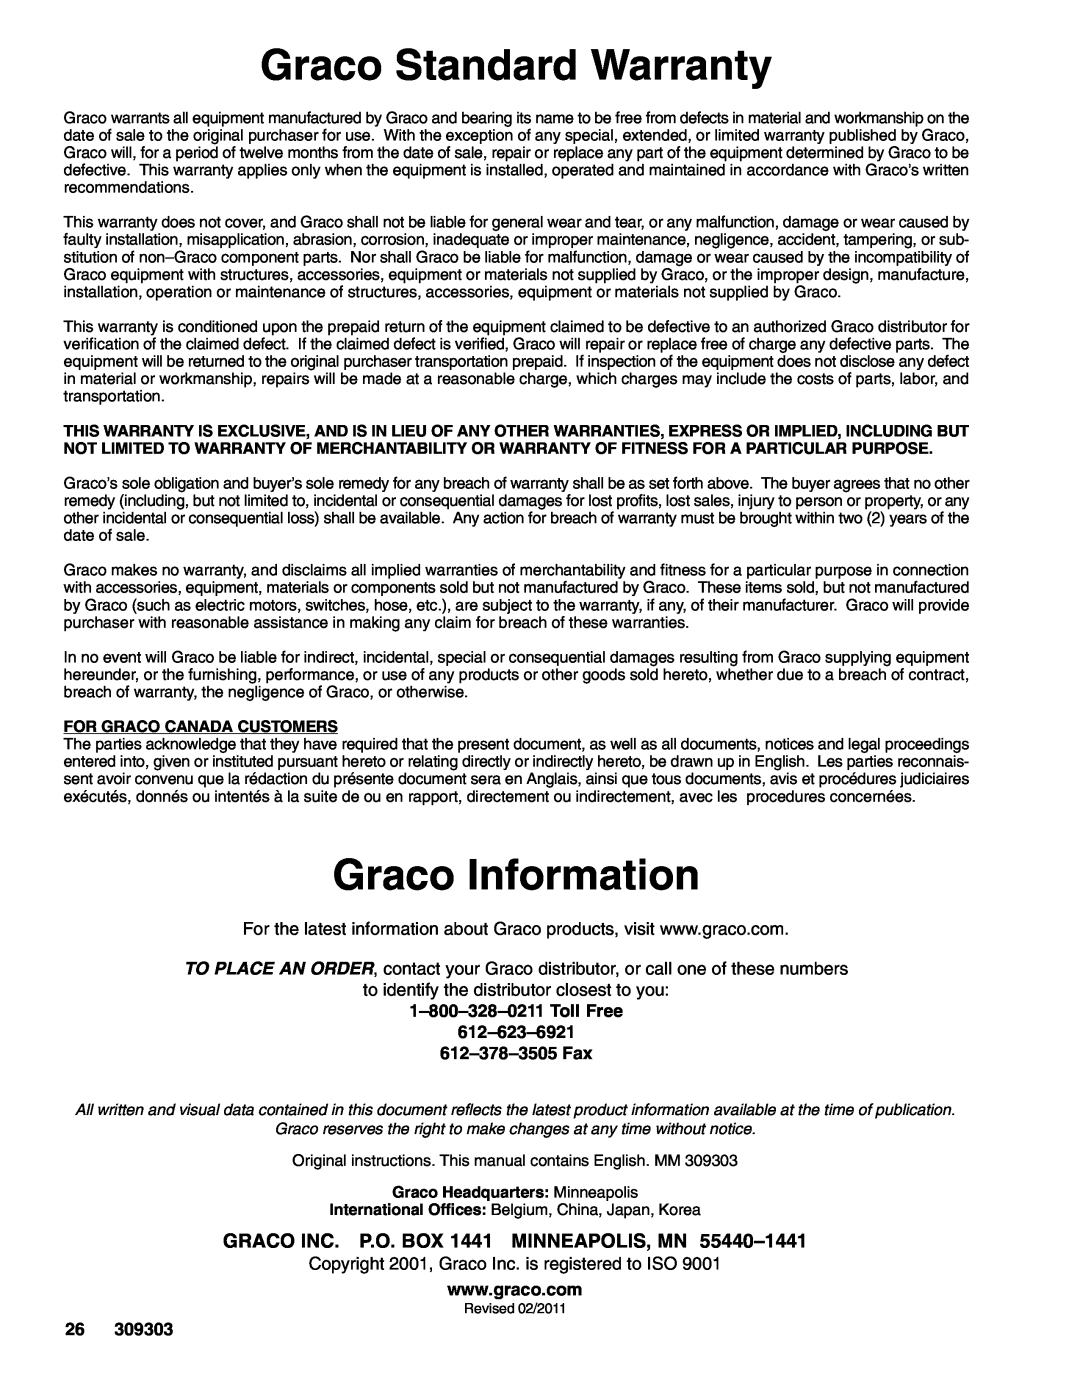 Graco 233501 Graco Standard Warranty, Graco Information, For Graco Canada Customers, Graco Headquarters Minneapolis 